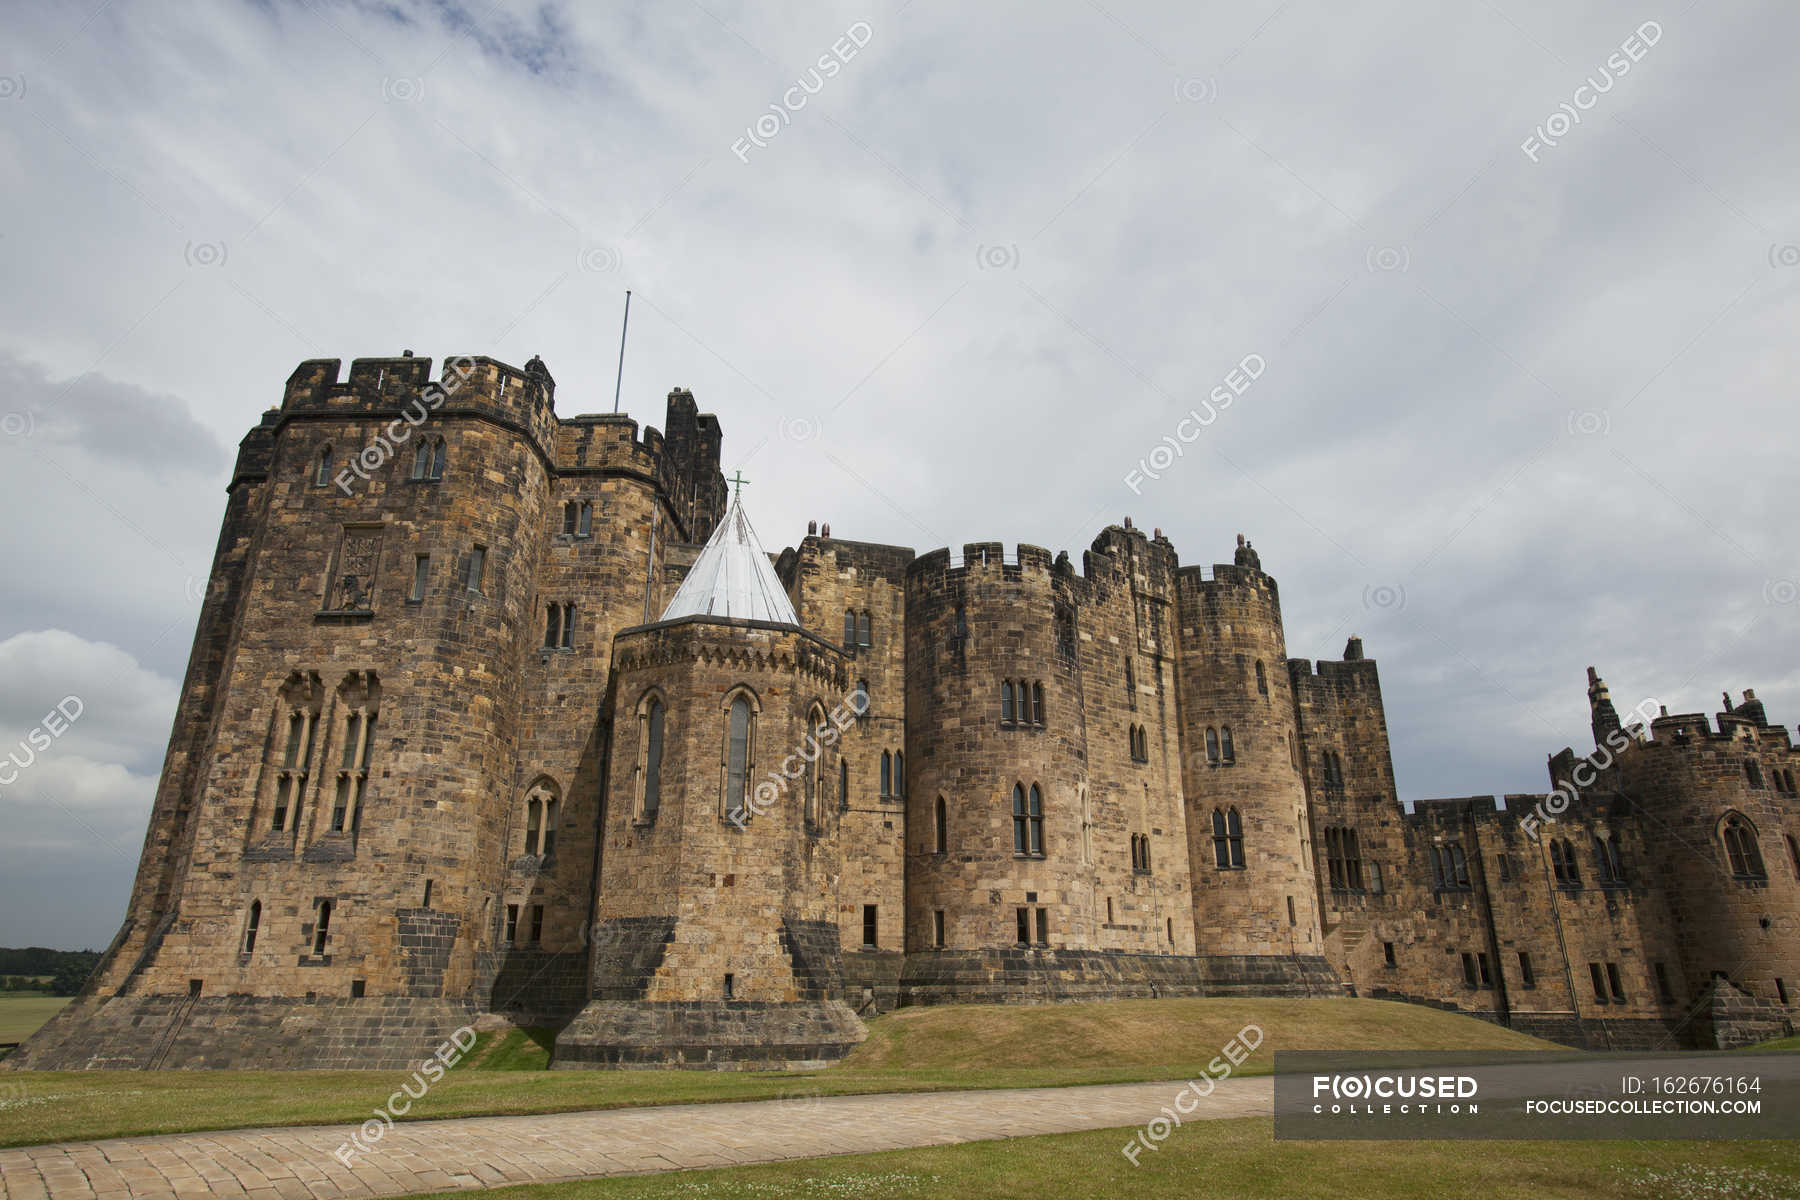 Alnwick Castle, England — Stock Photo | #162676164